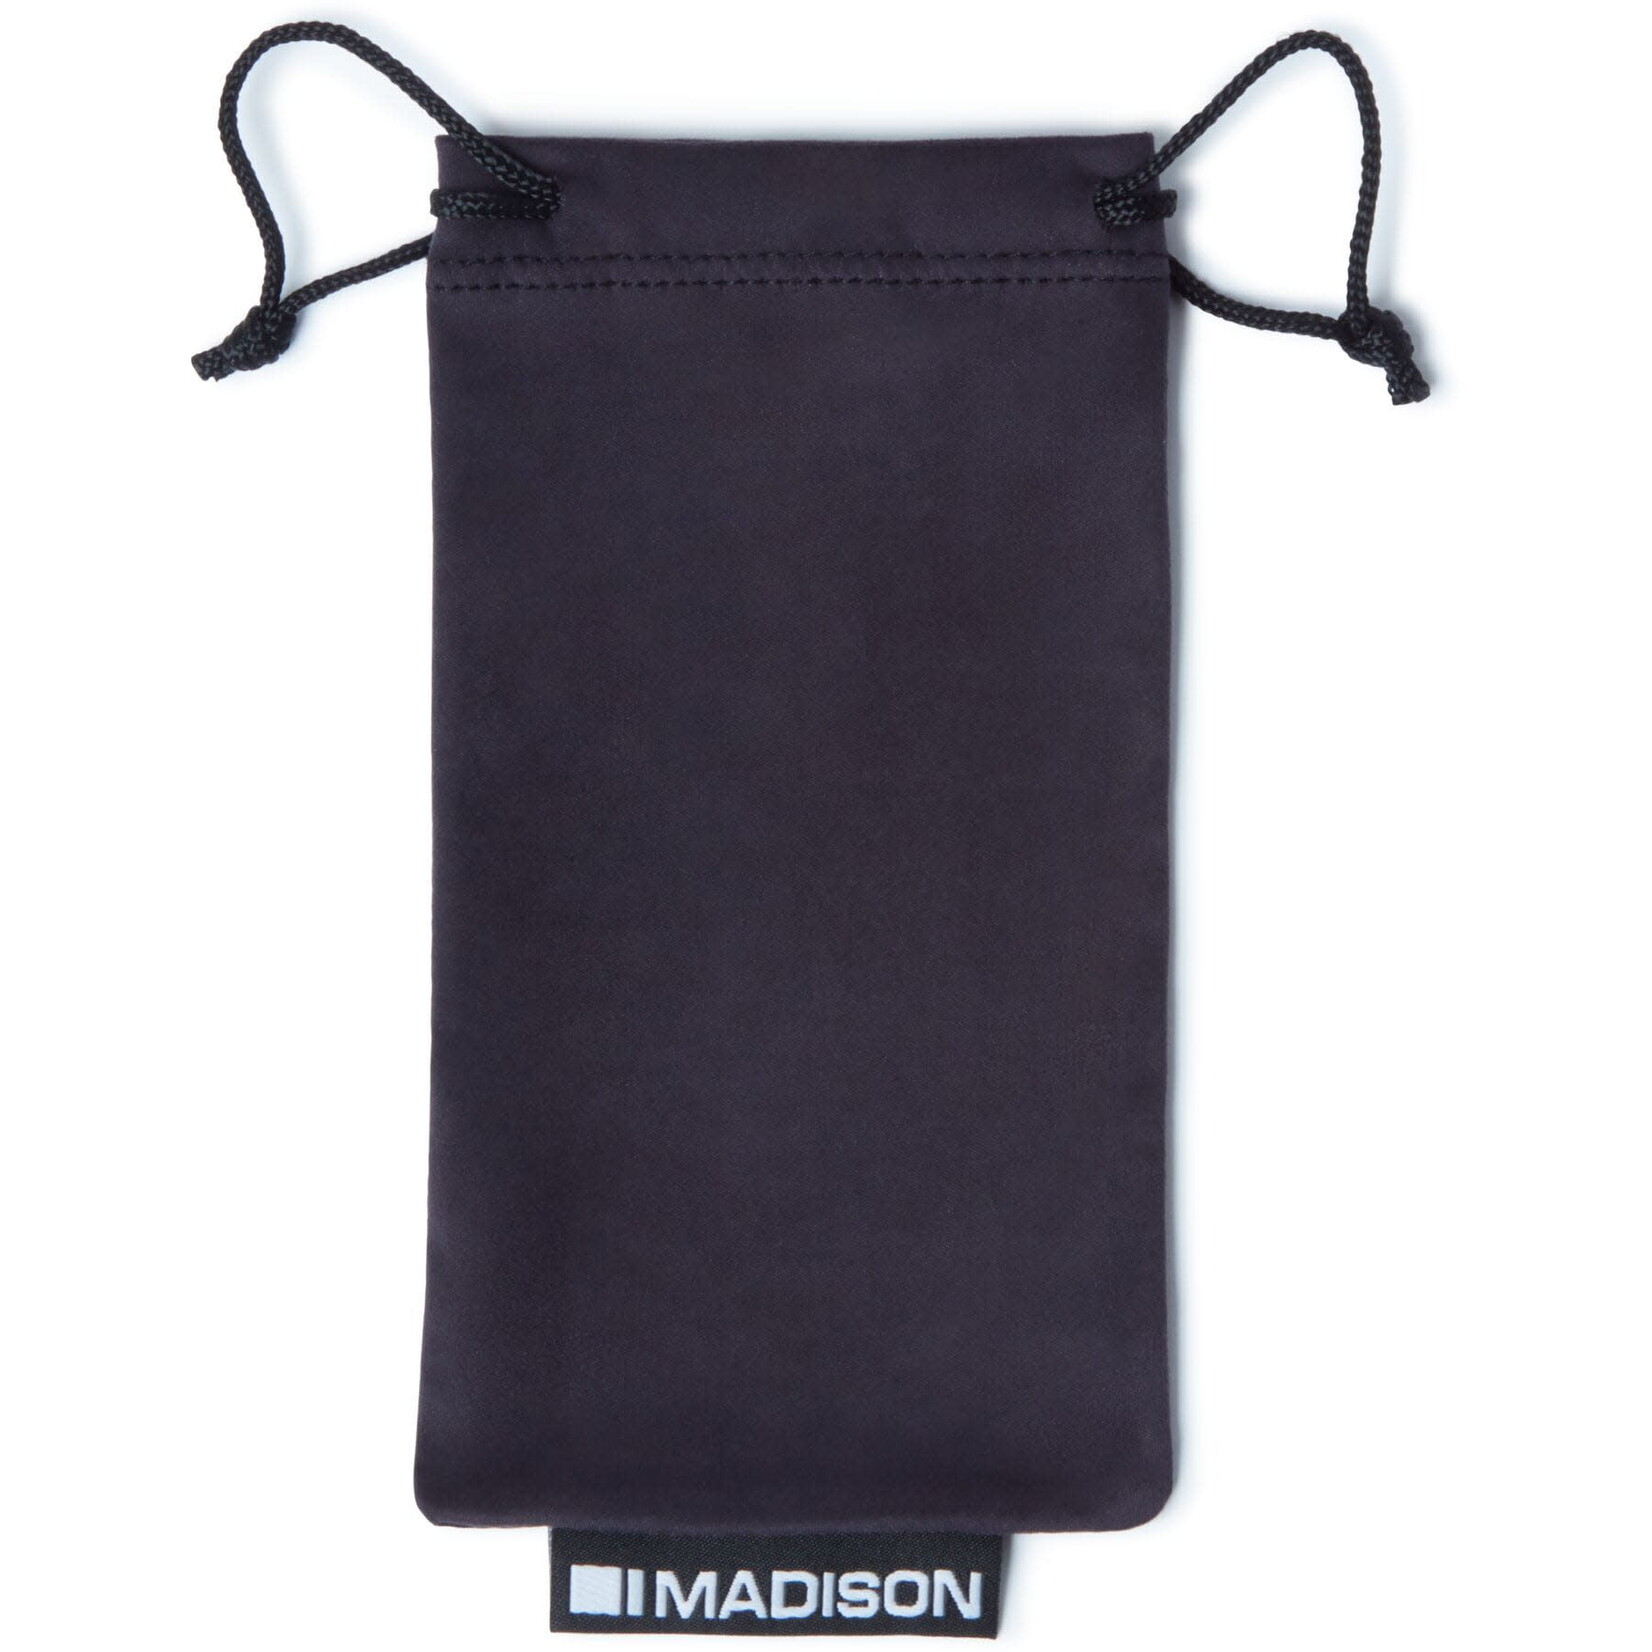 Madison Madison Enigma Glasses - matt black / clear